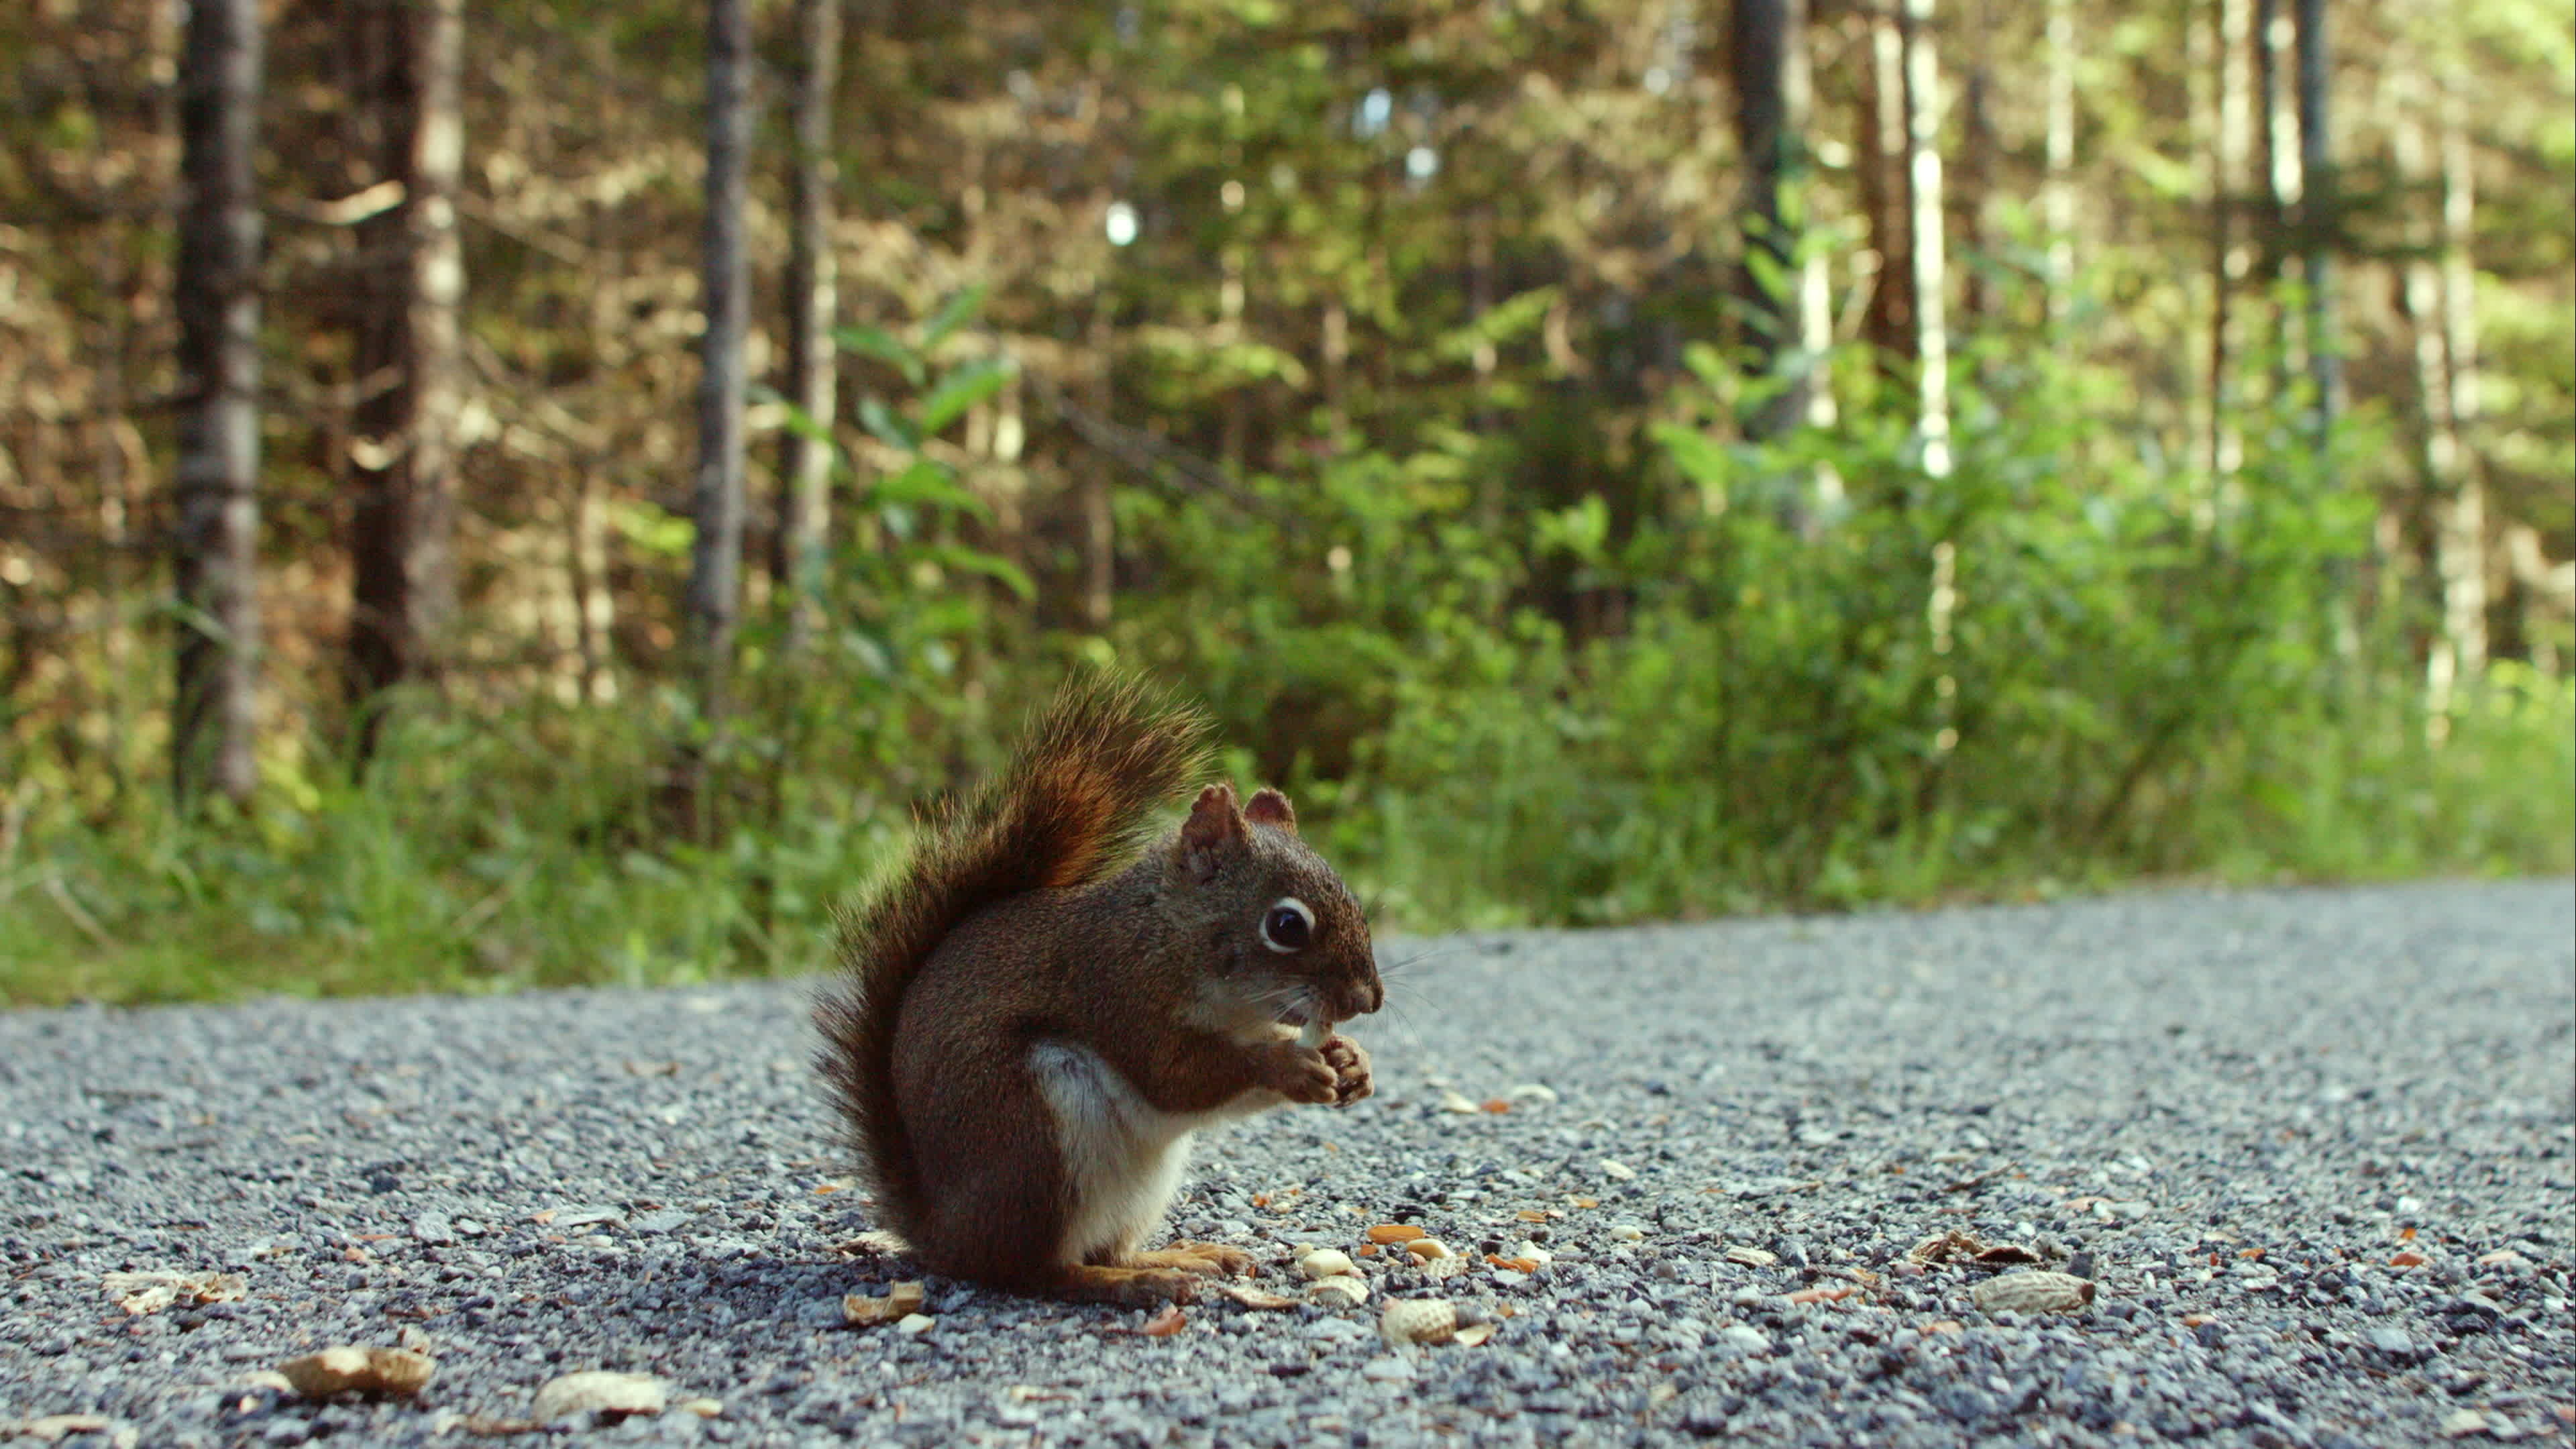 Peanuts (Food), Squirrel's snack, Ground activity, Wildlife footage, 3840x2160 4K Desktop